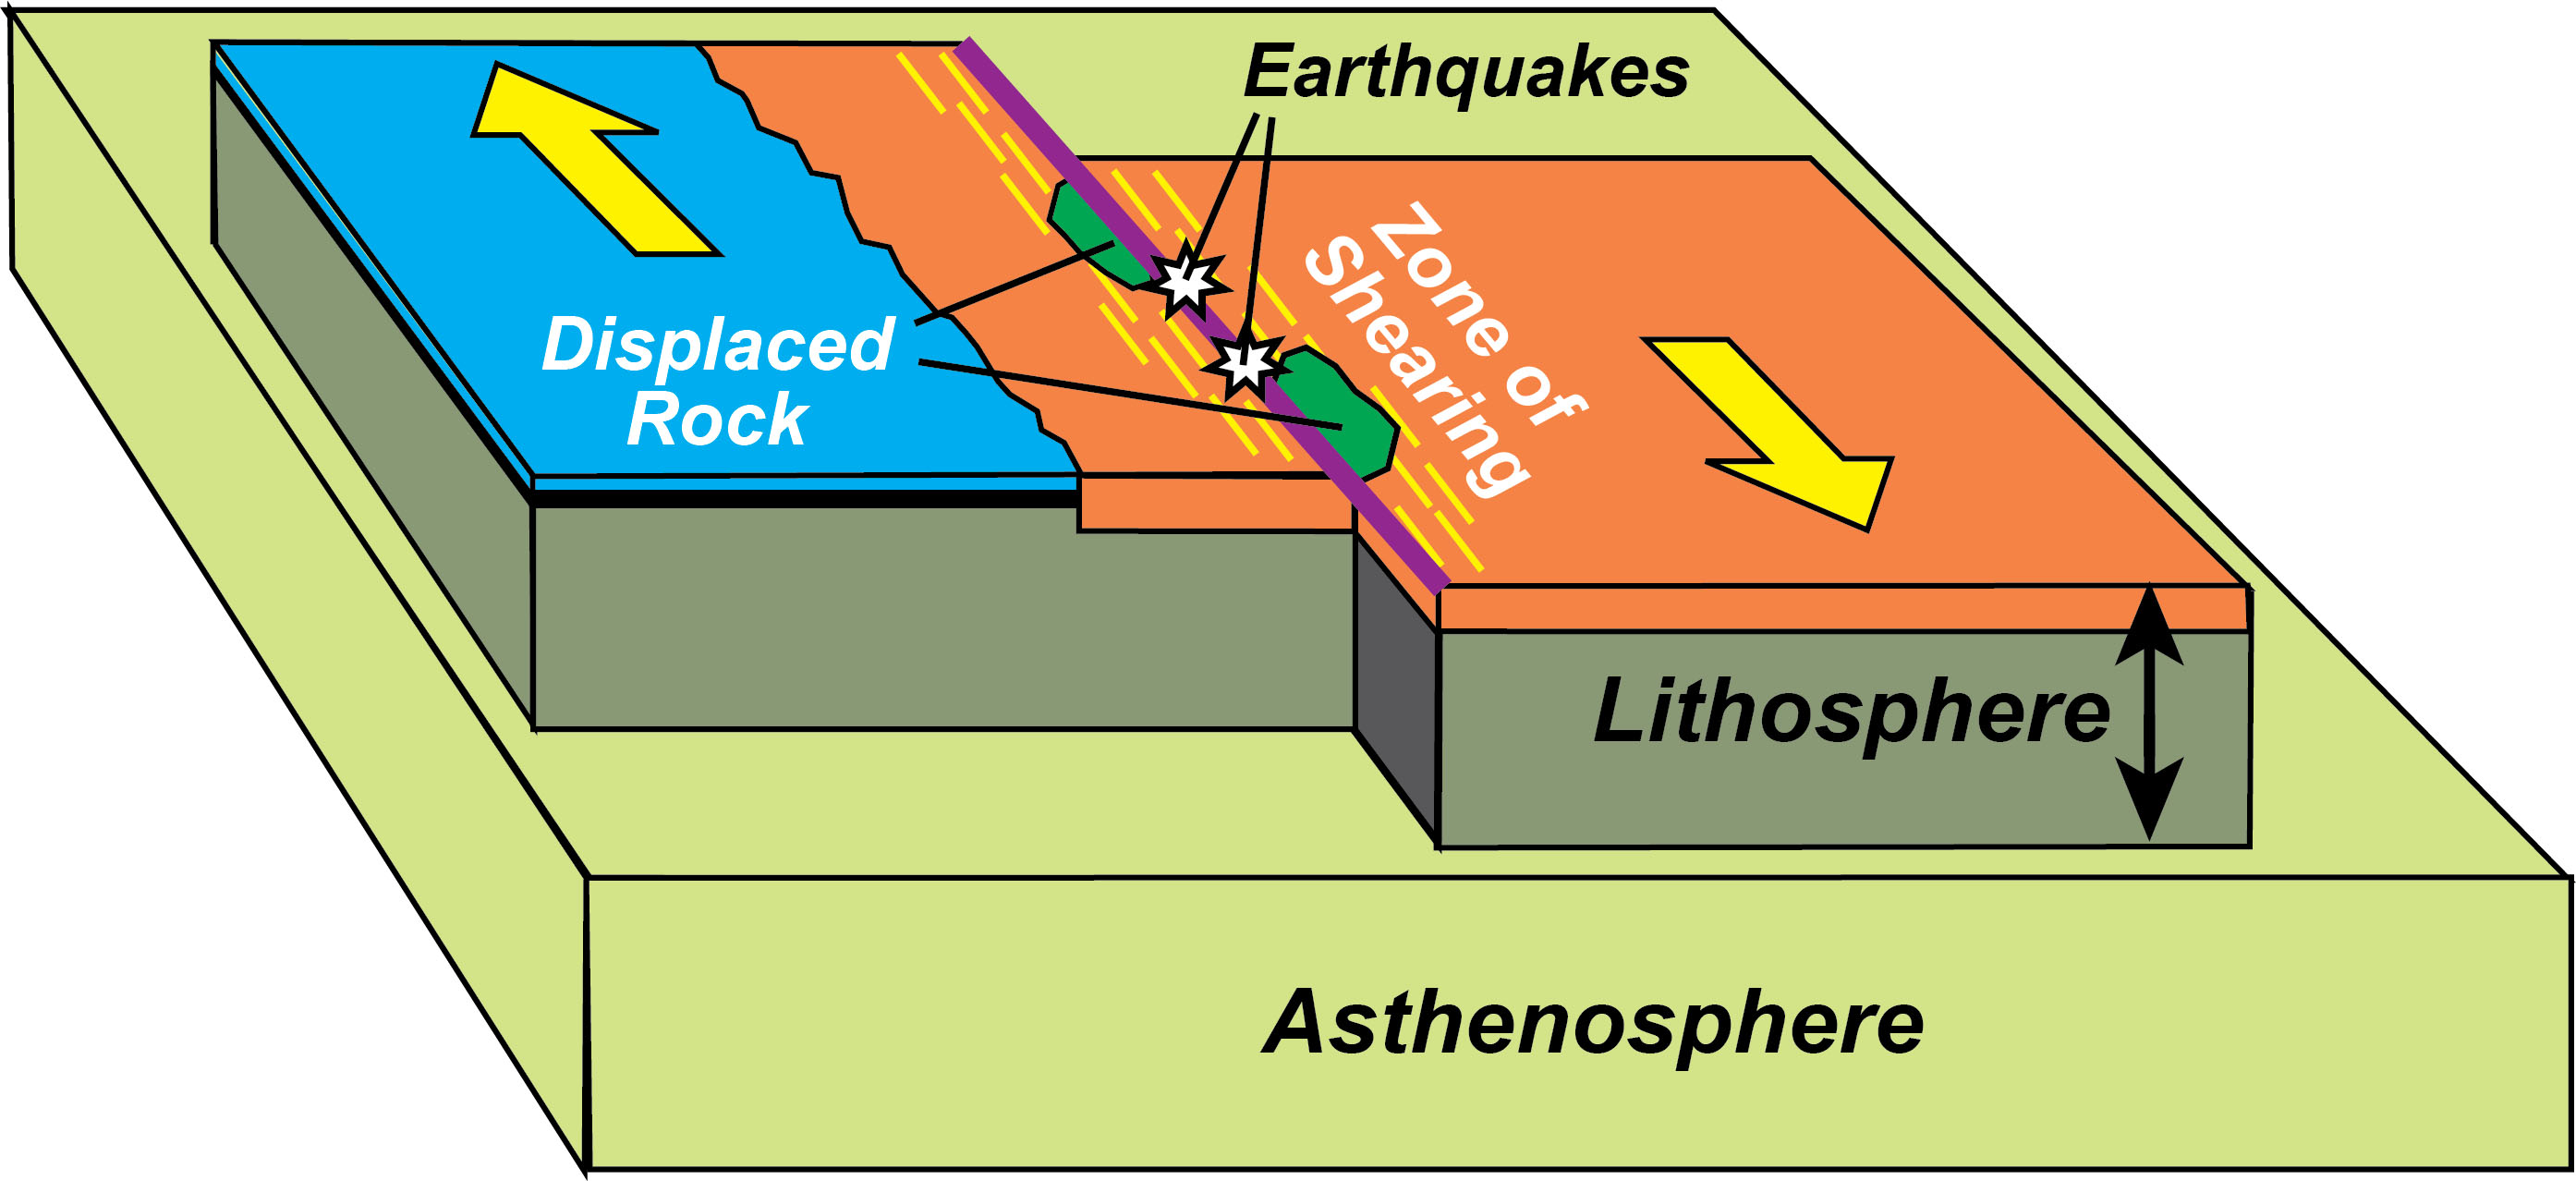 plate tectonics definition